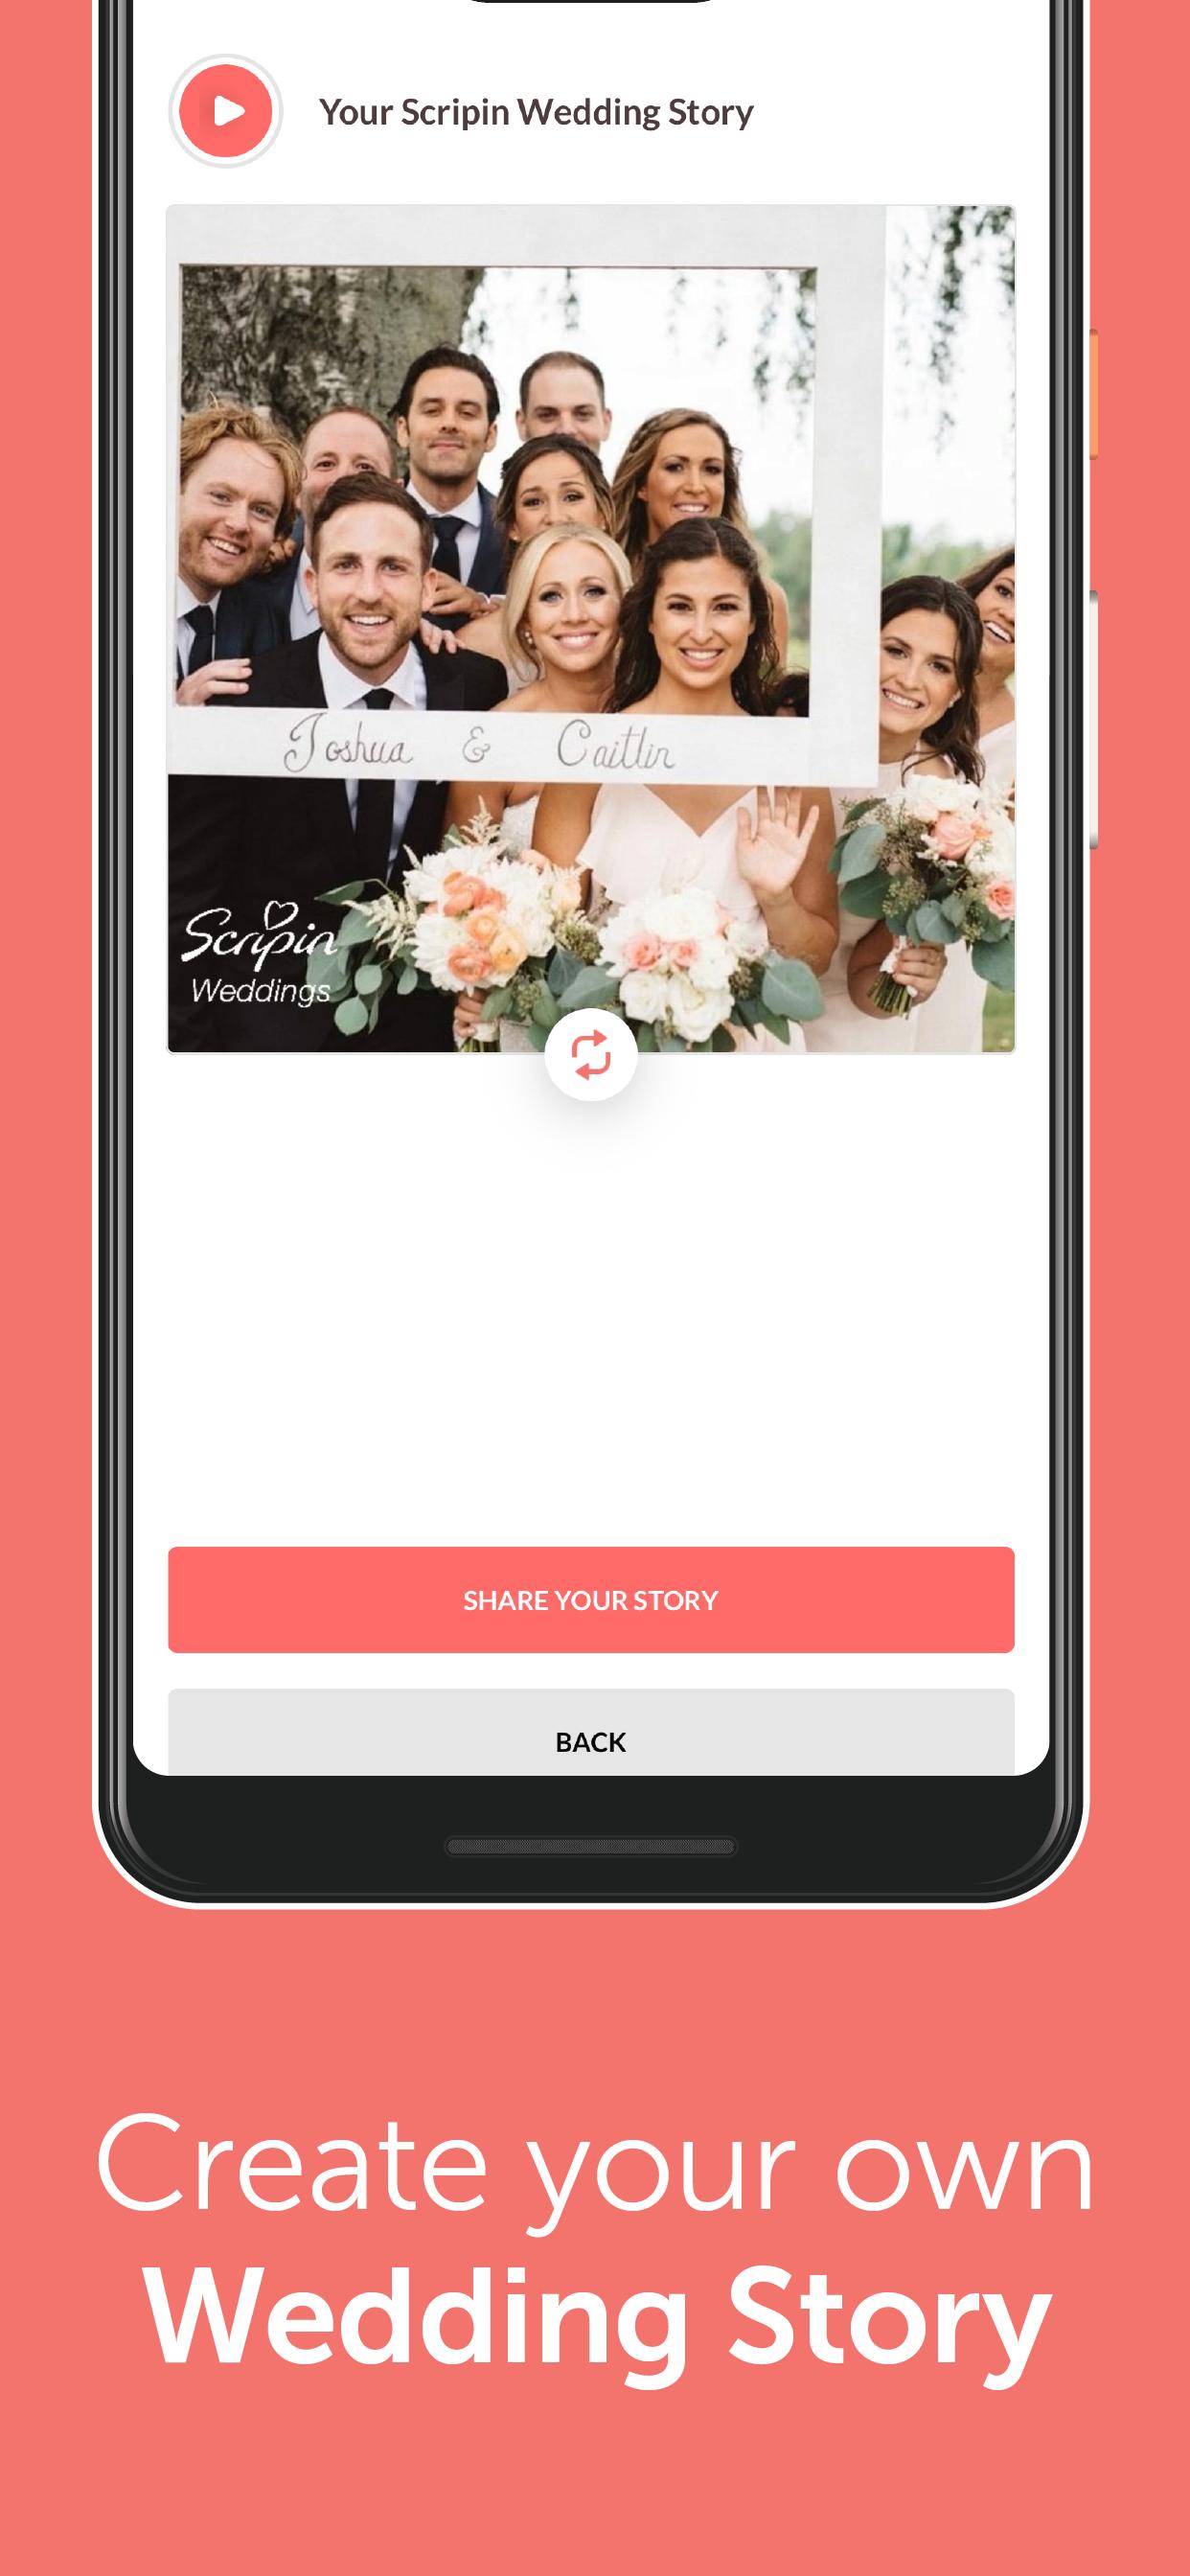 Scripin Weddings The Photo App for Weddings 2.2.4 Screenshot 6